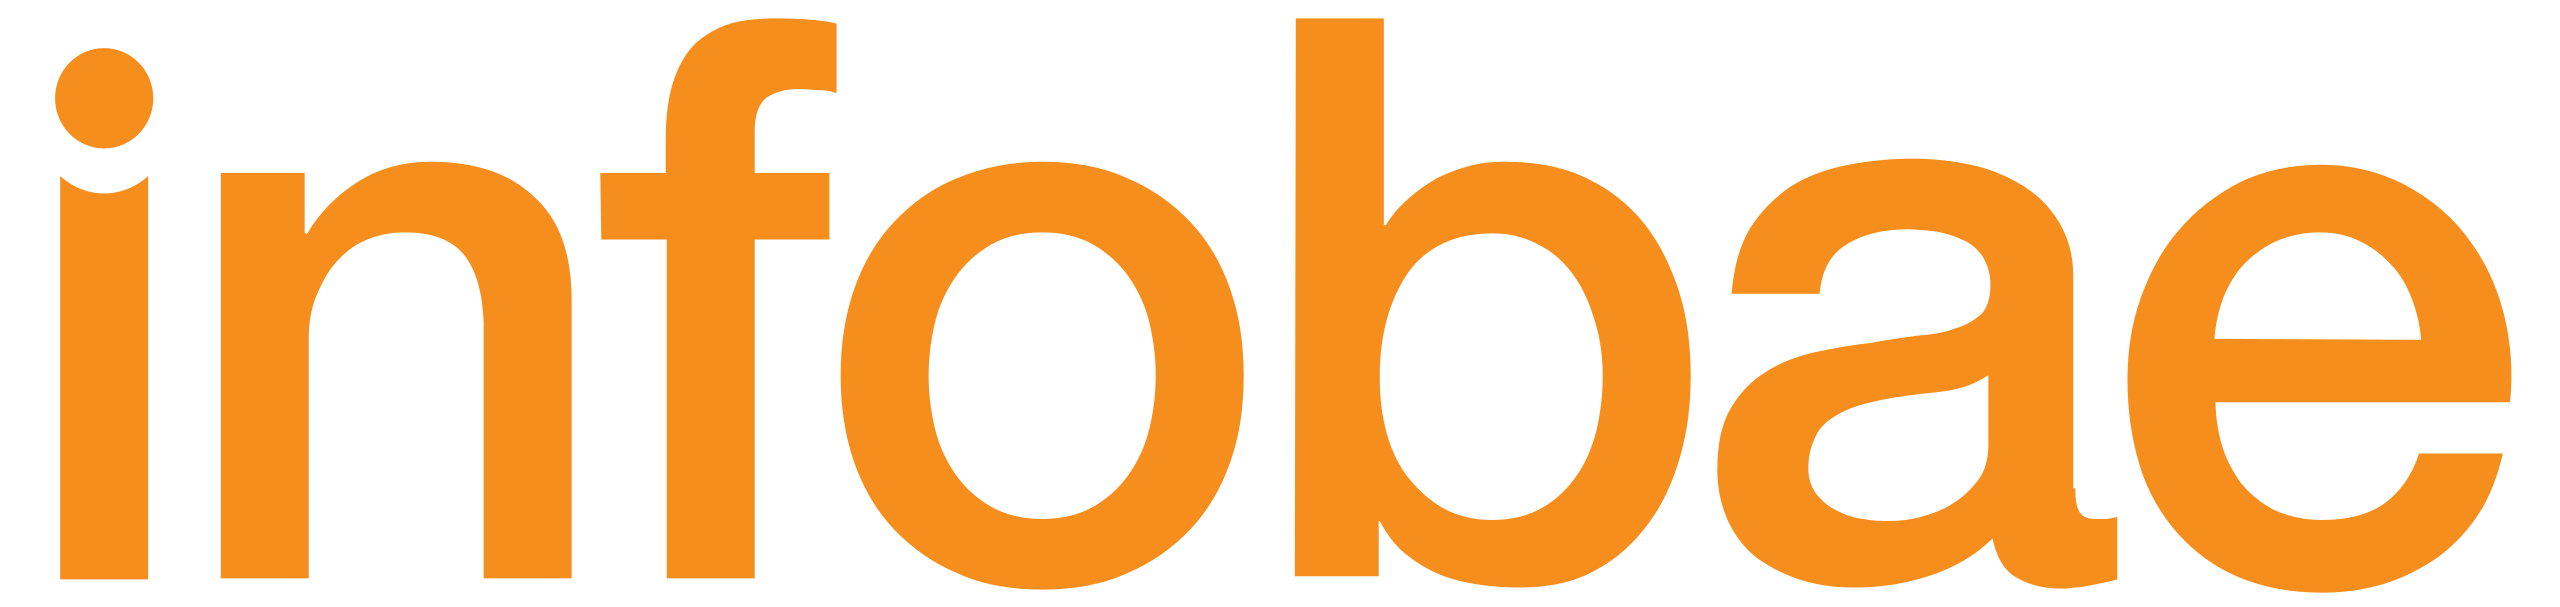 Archivo:Infobae logo.svg - Wikipedia, la enciclopedia libre